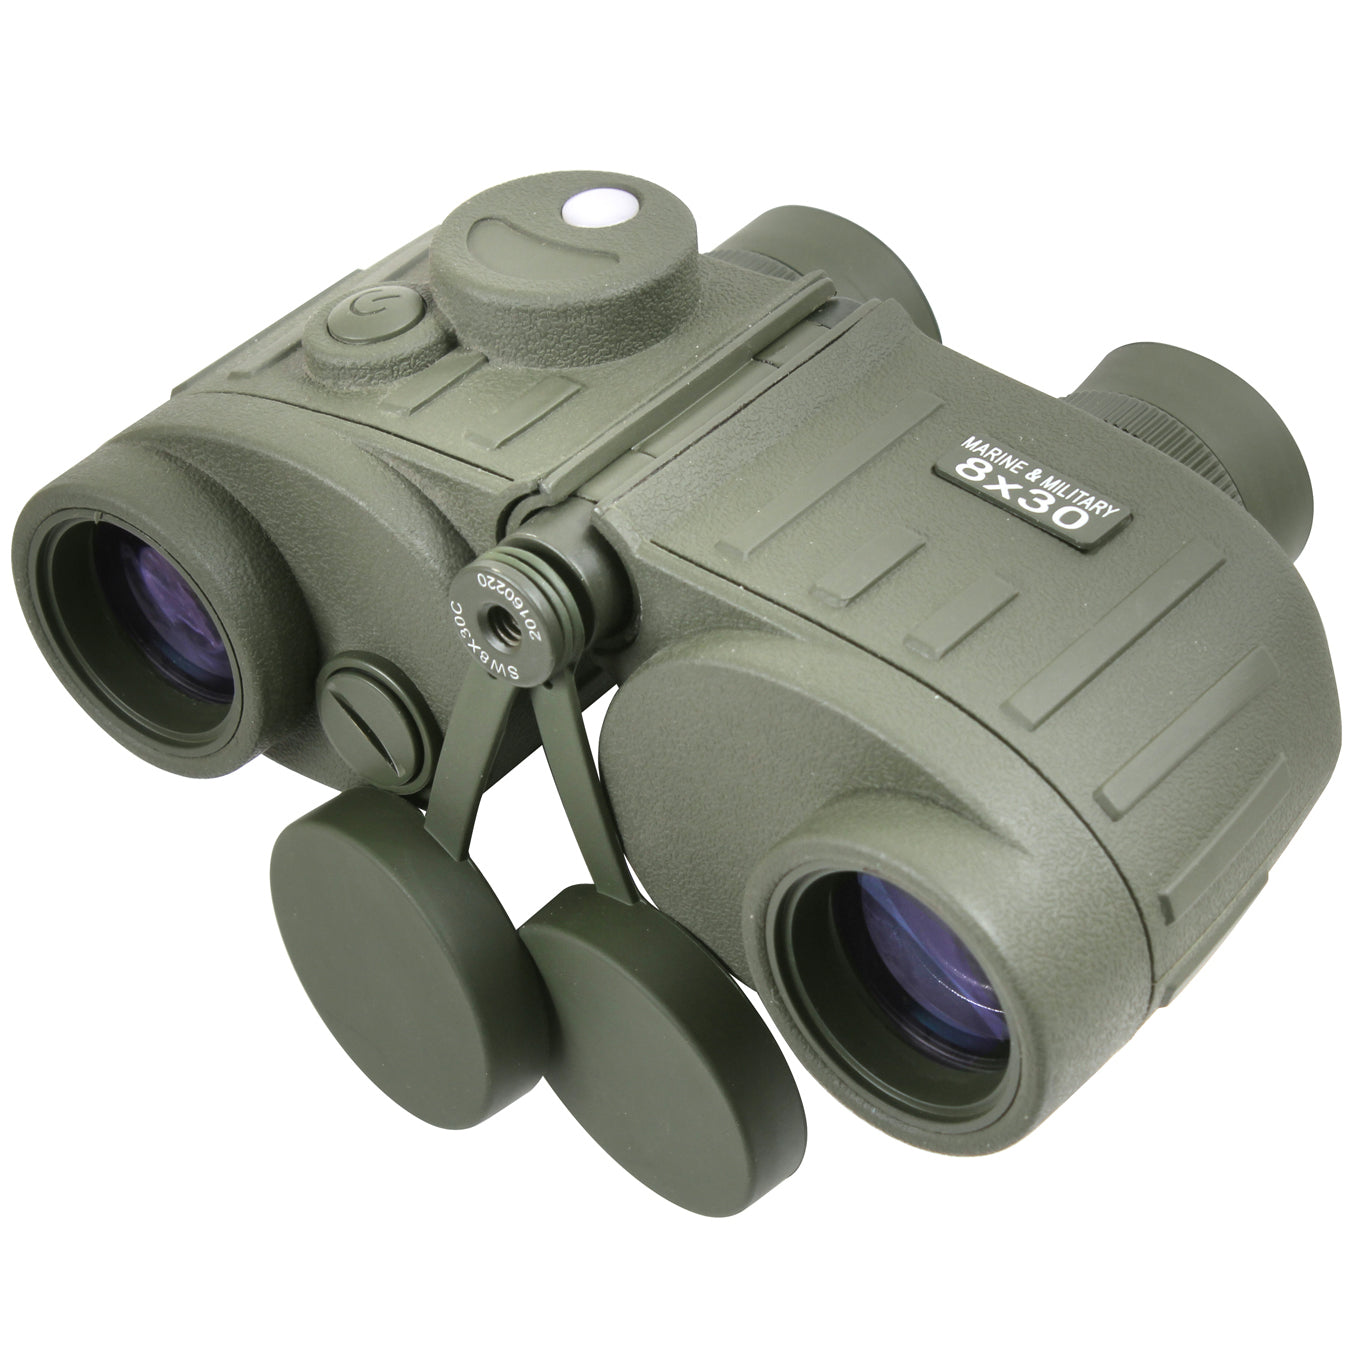 Rothco Military Style 8 x 30 MM Binoculars